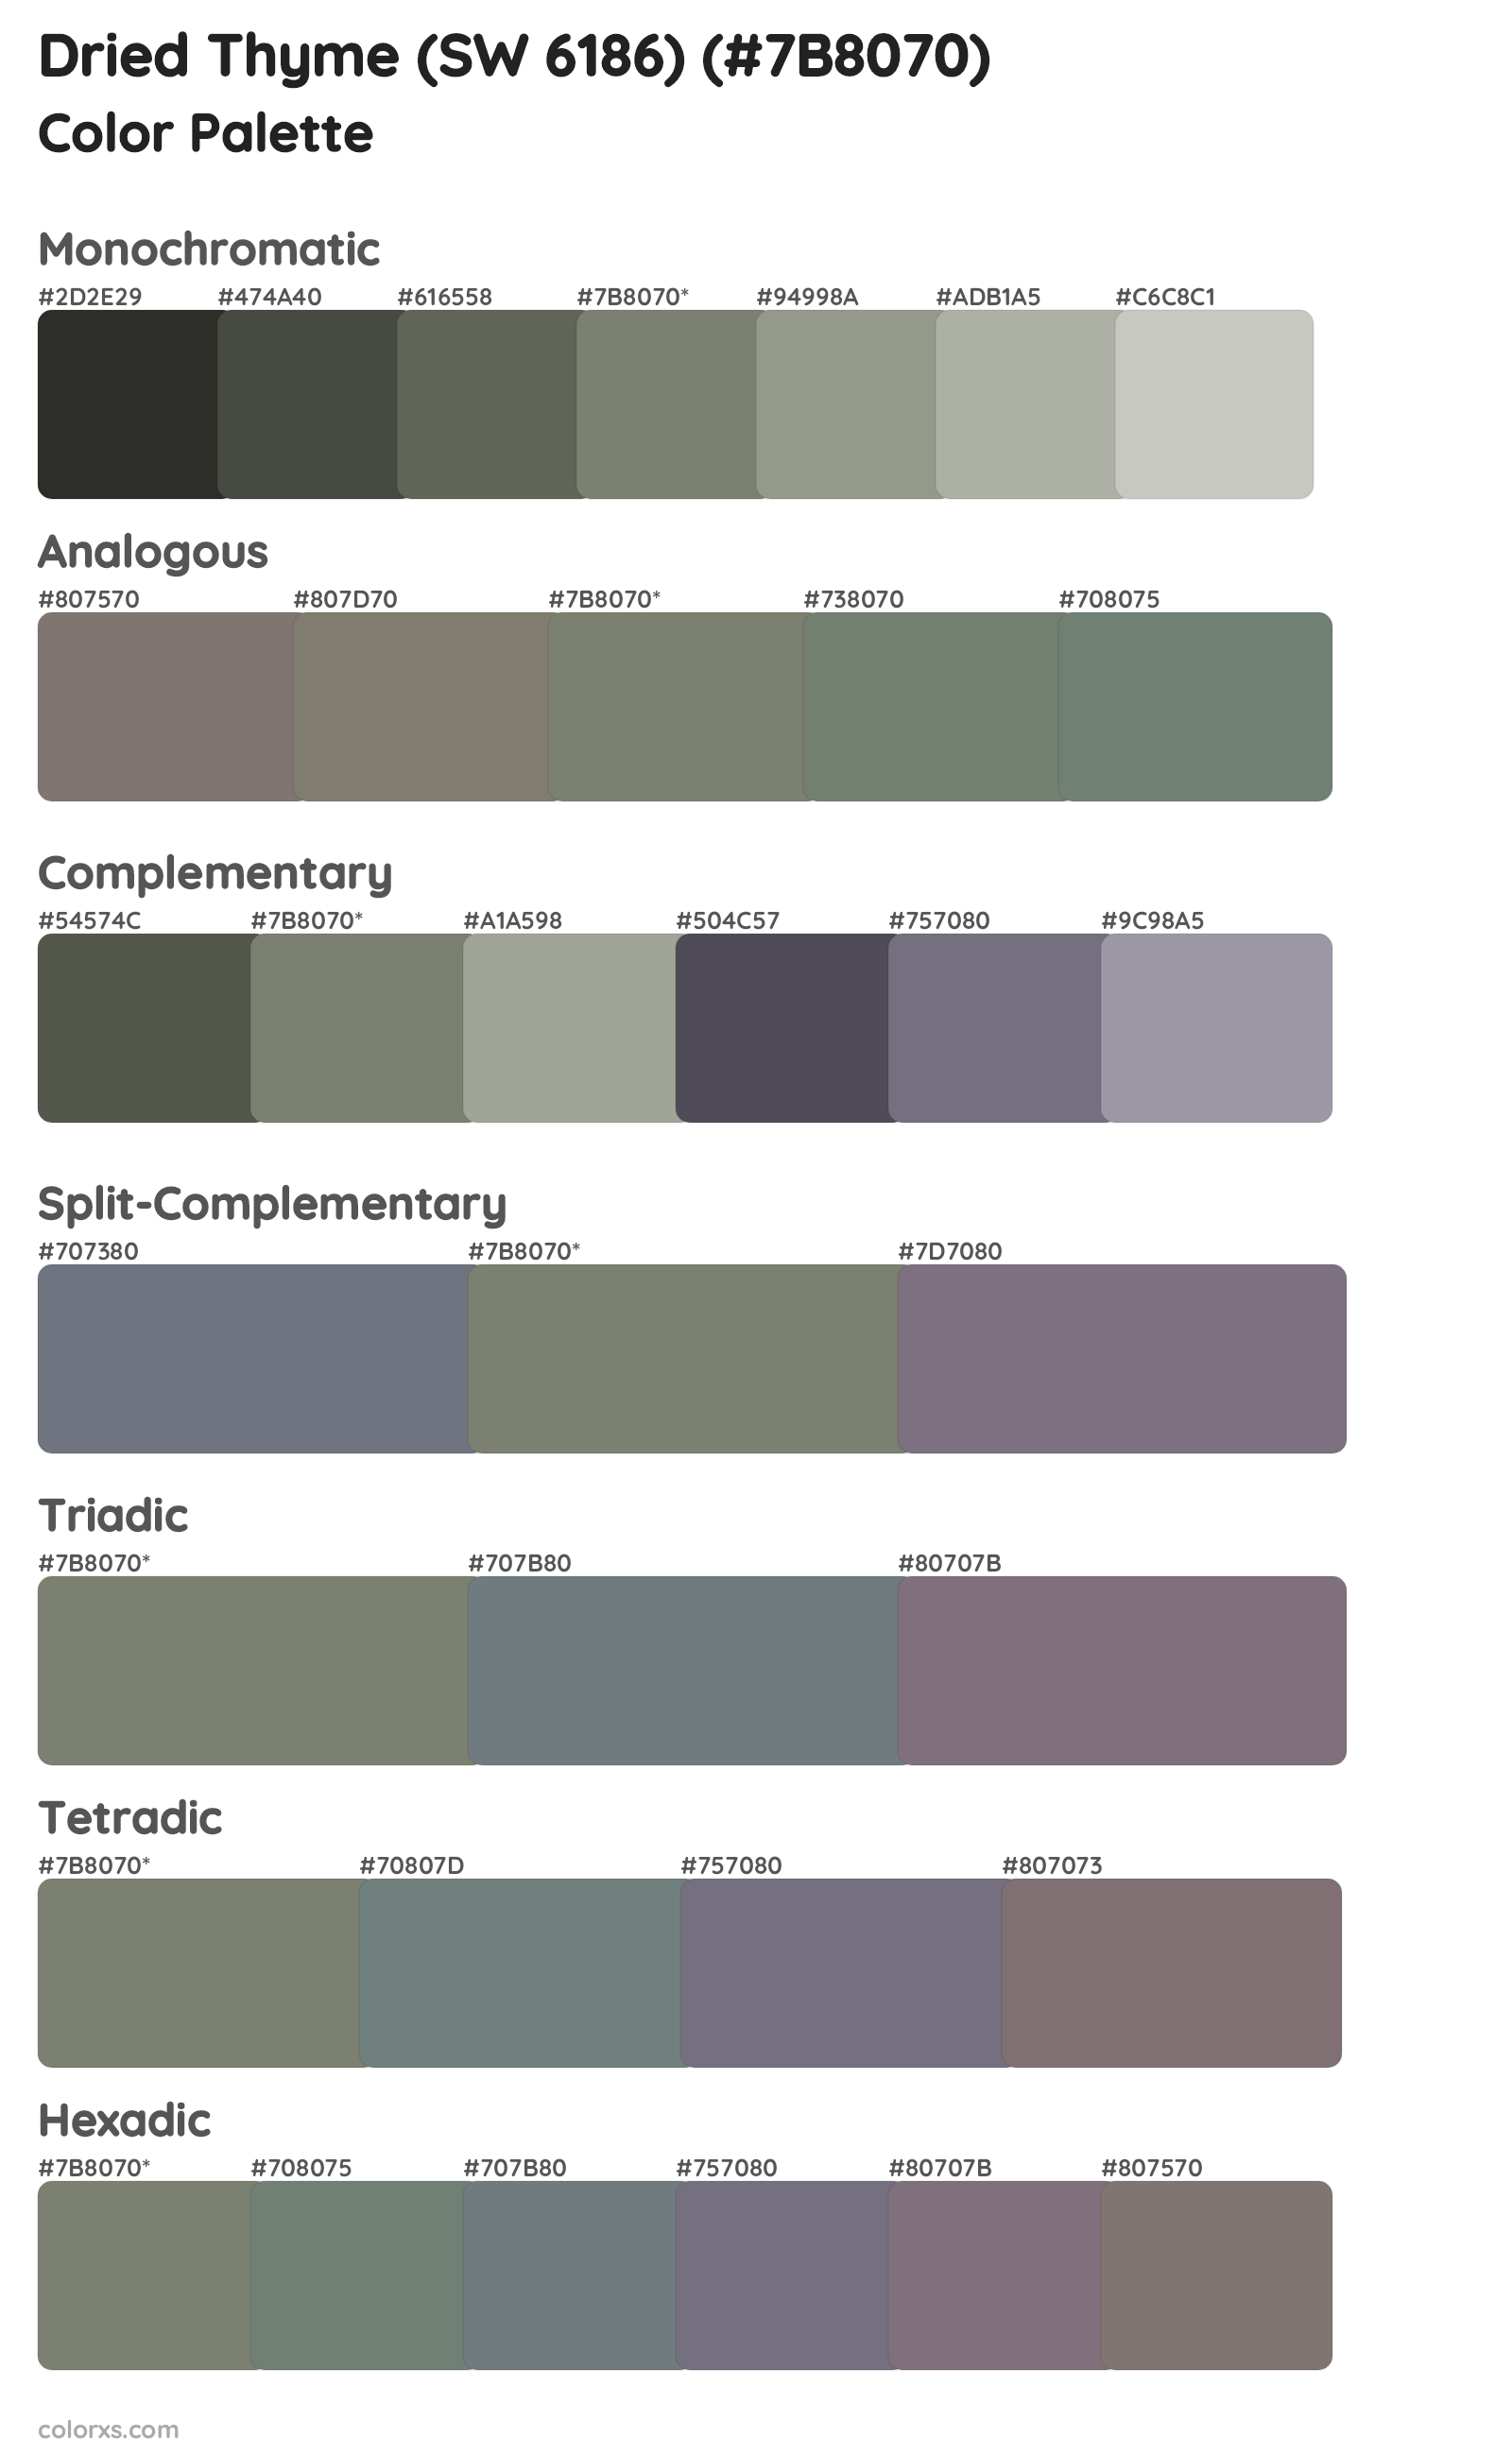 Dried Thyme (SW 6186) Color Scheme Palettes